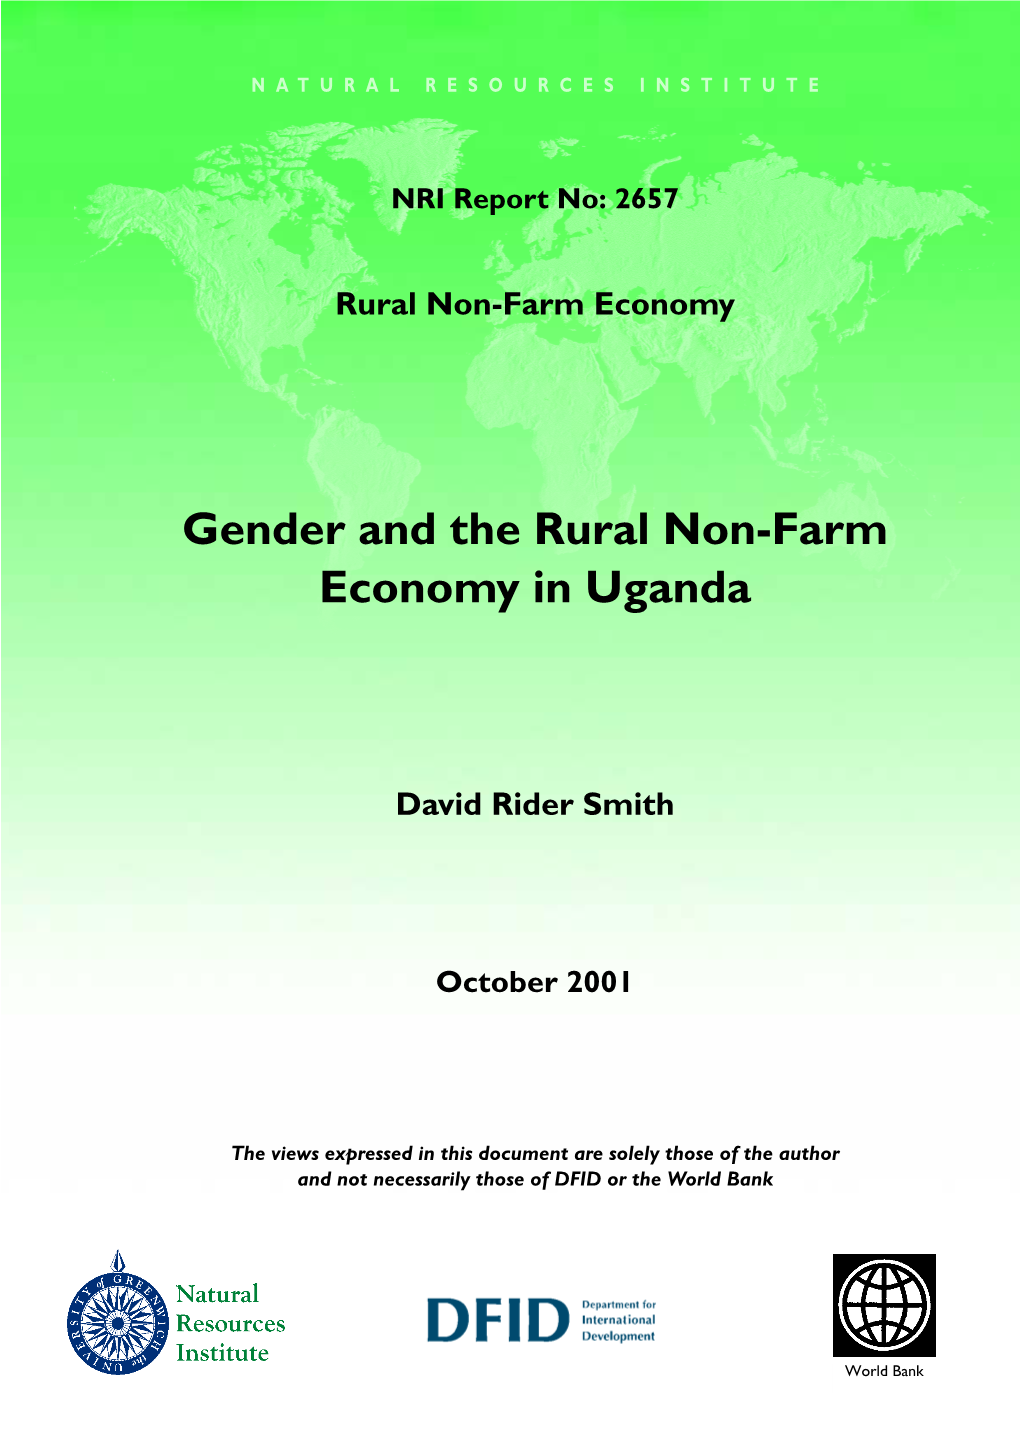 Gender and the Rural Non-Farm Economy in Uganda